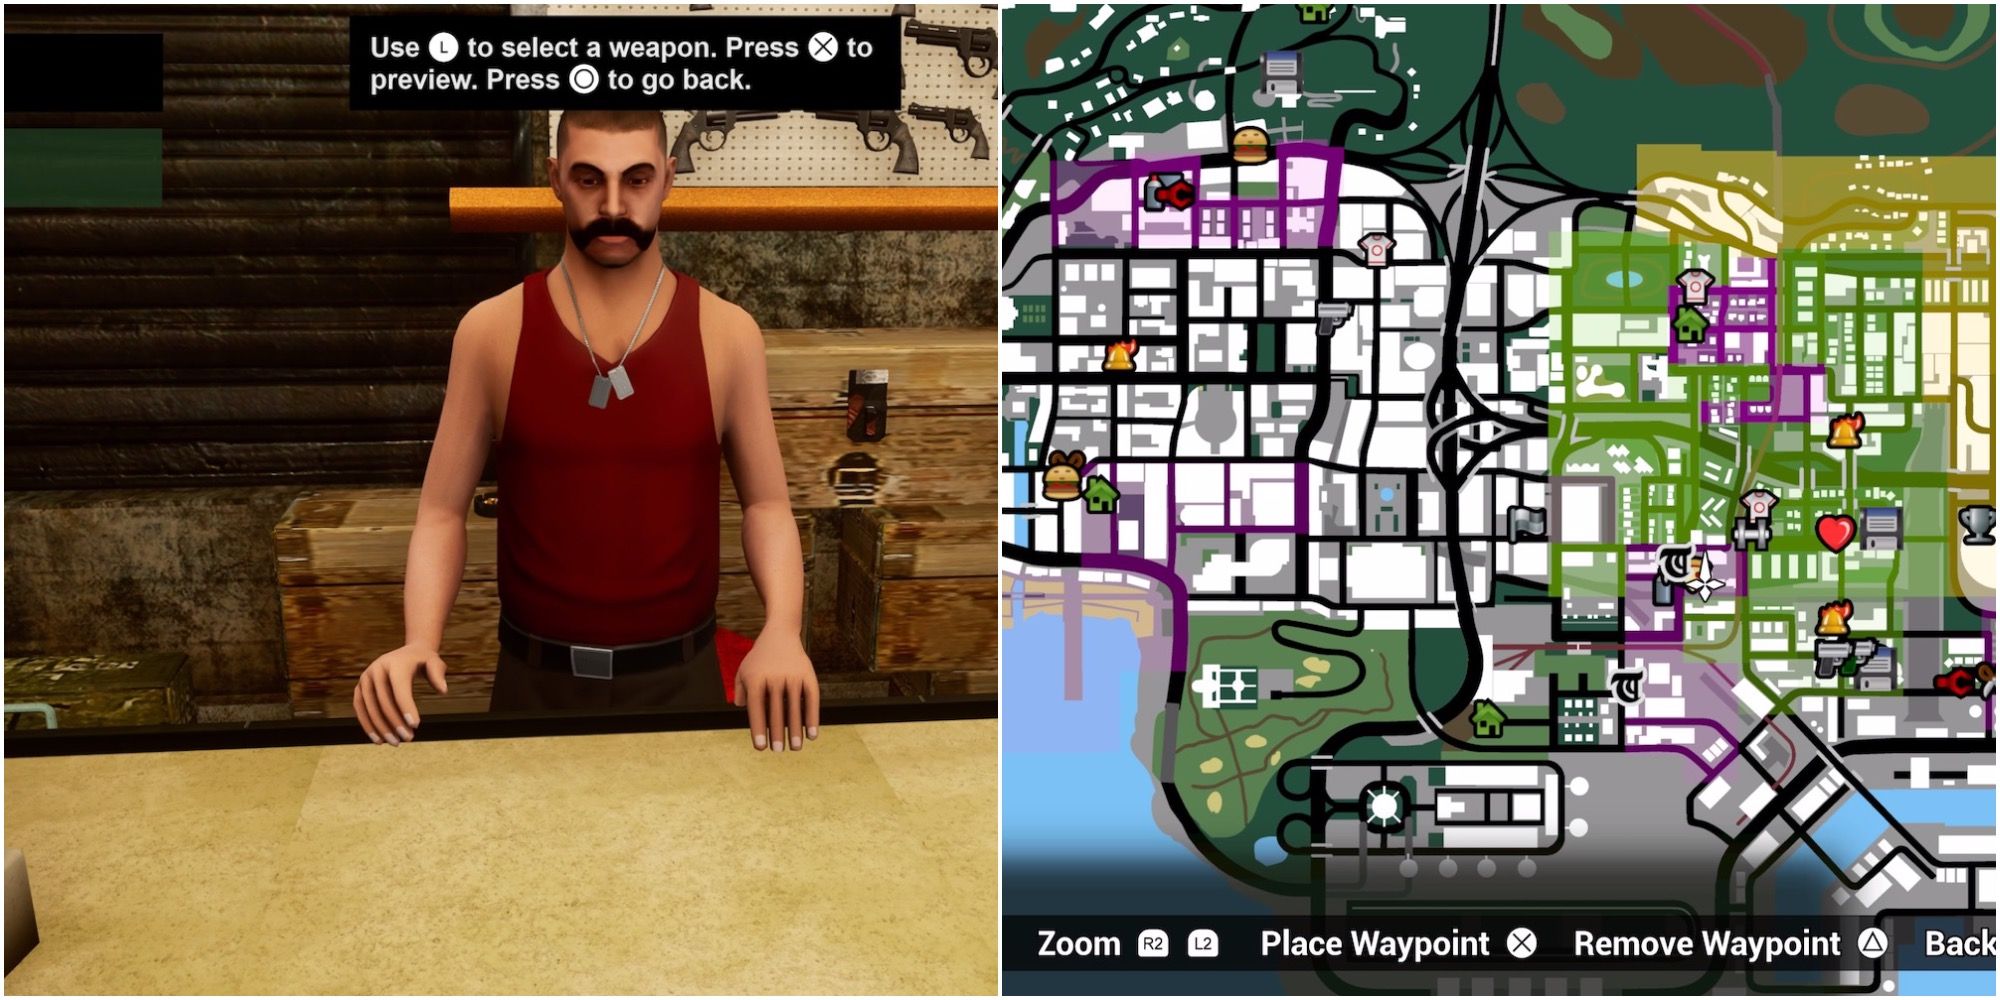 Gangs and Turf Wars - GTA: San Andreas Guide - IGN